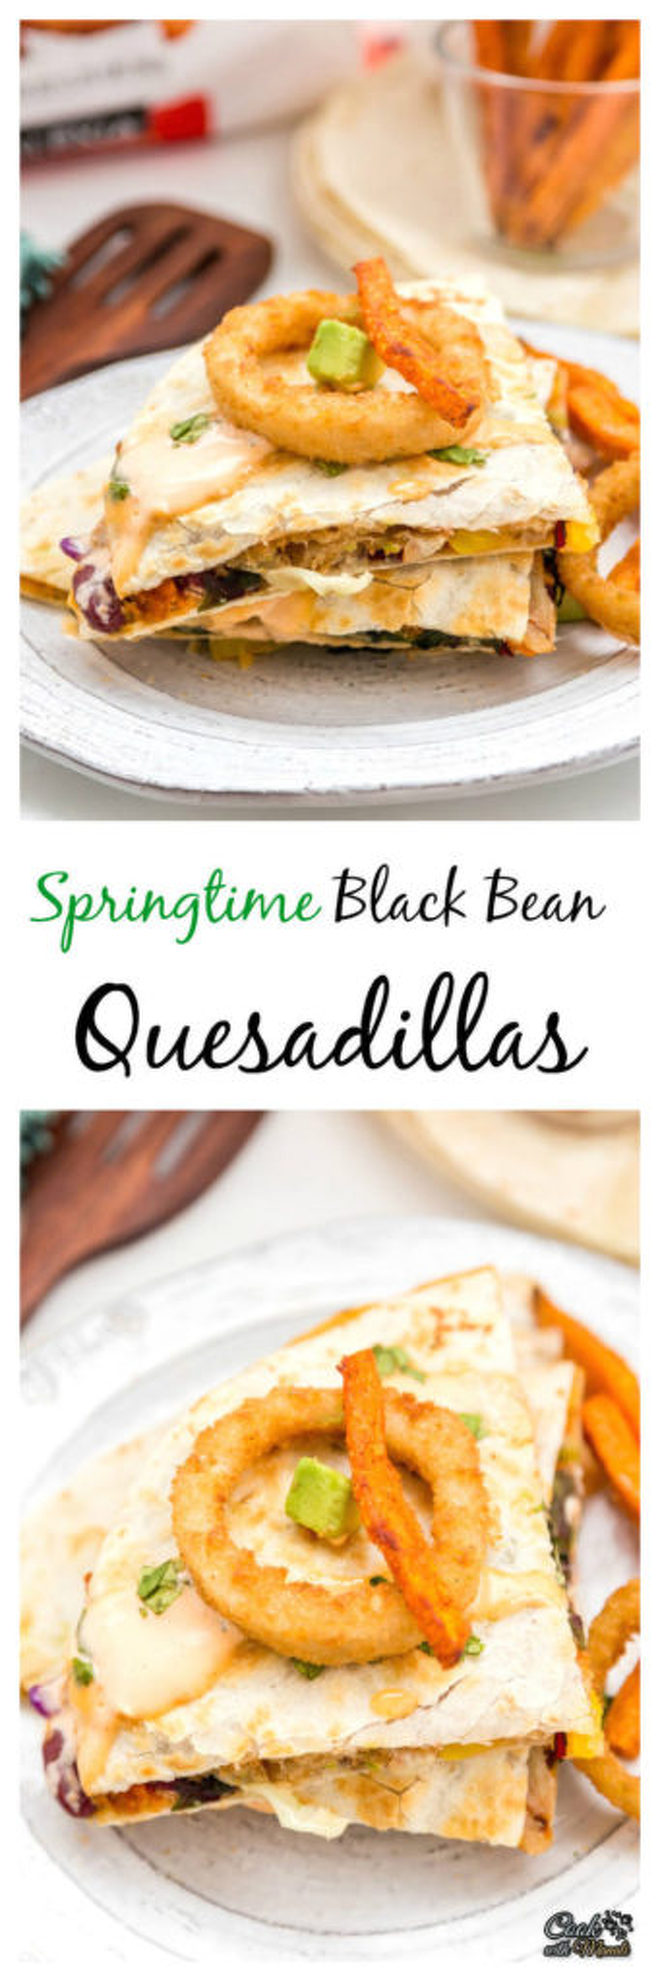 Springtime Black Bean Quesadillas - Cook With Manali